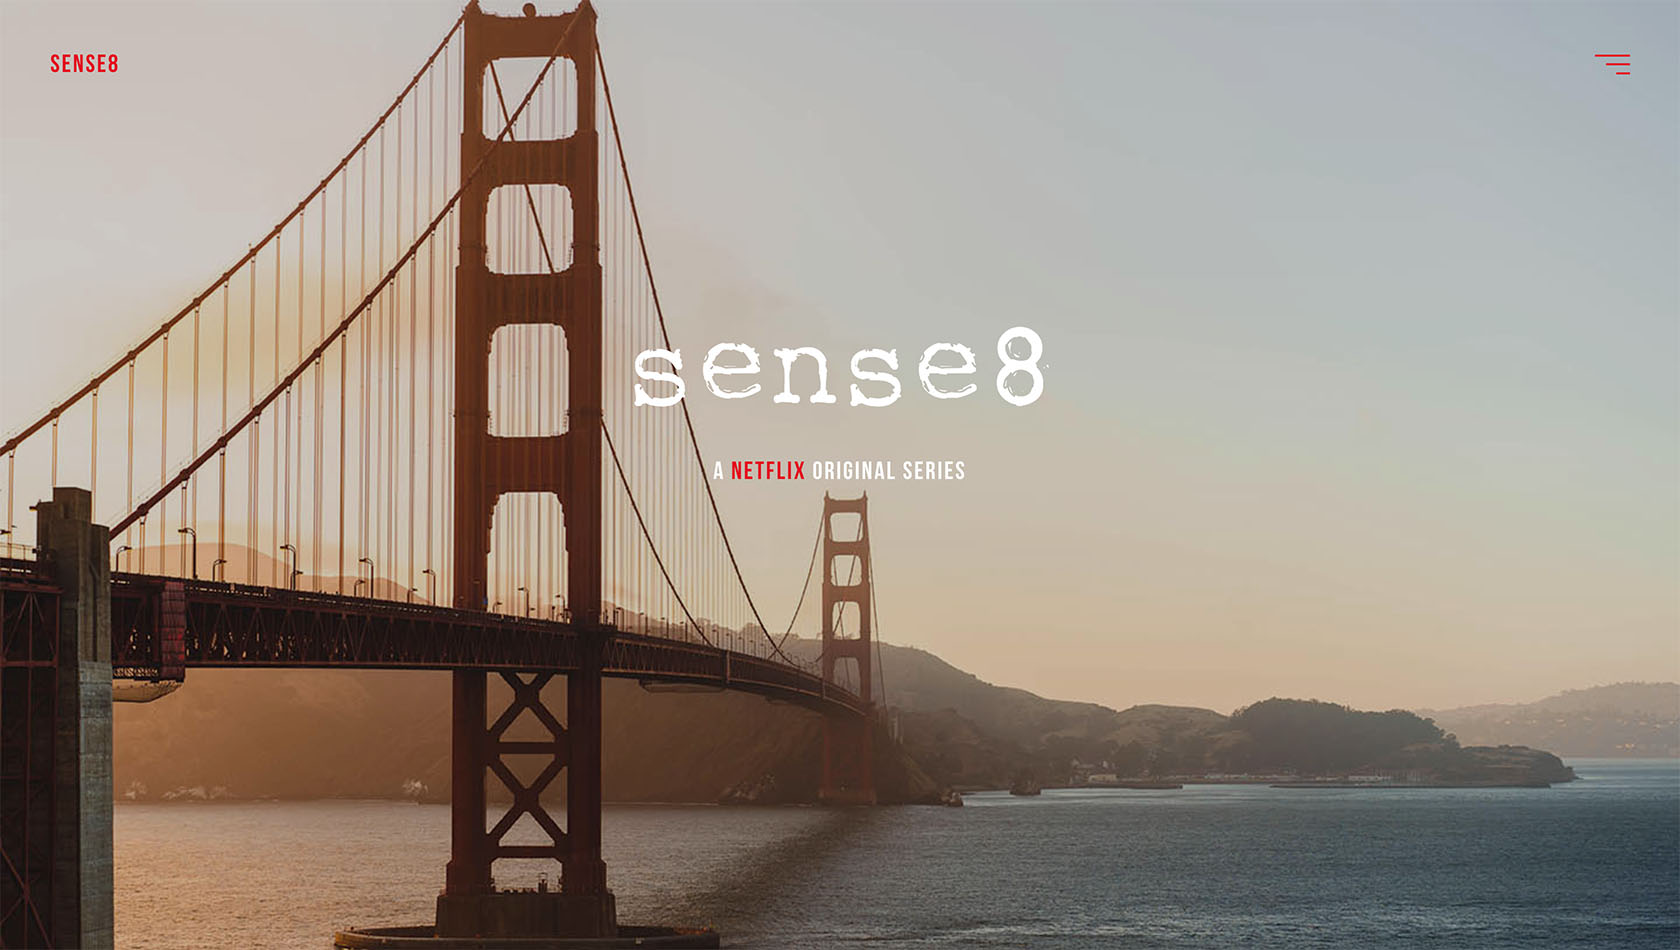 Web designer and Develoeper Project of Sense8